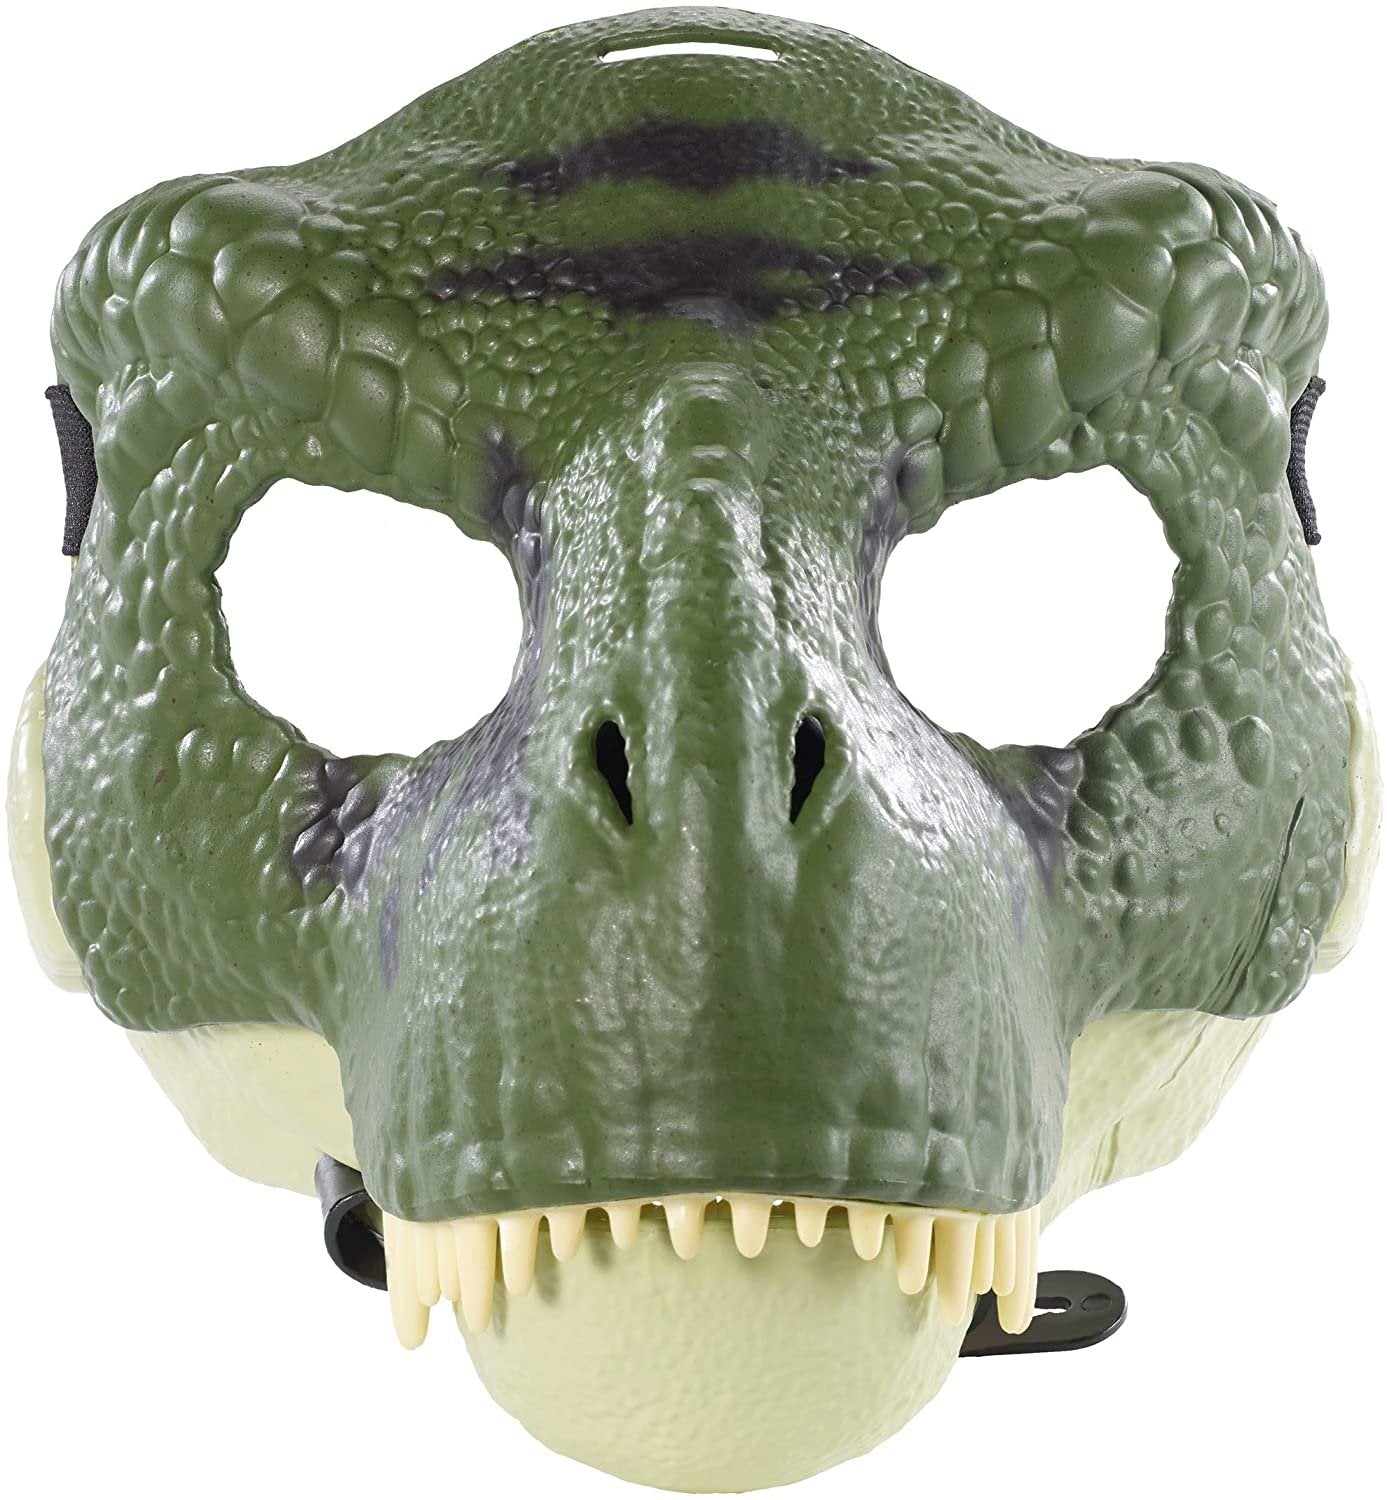 Jurassic World - Tyrannosaurus Rex Mask with Opening Jaw